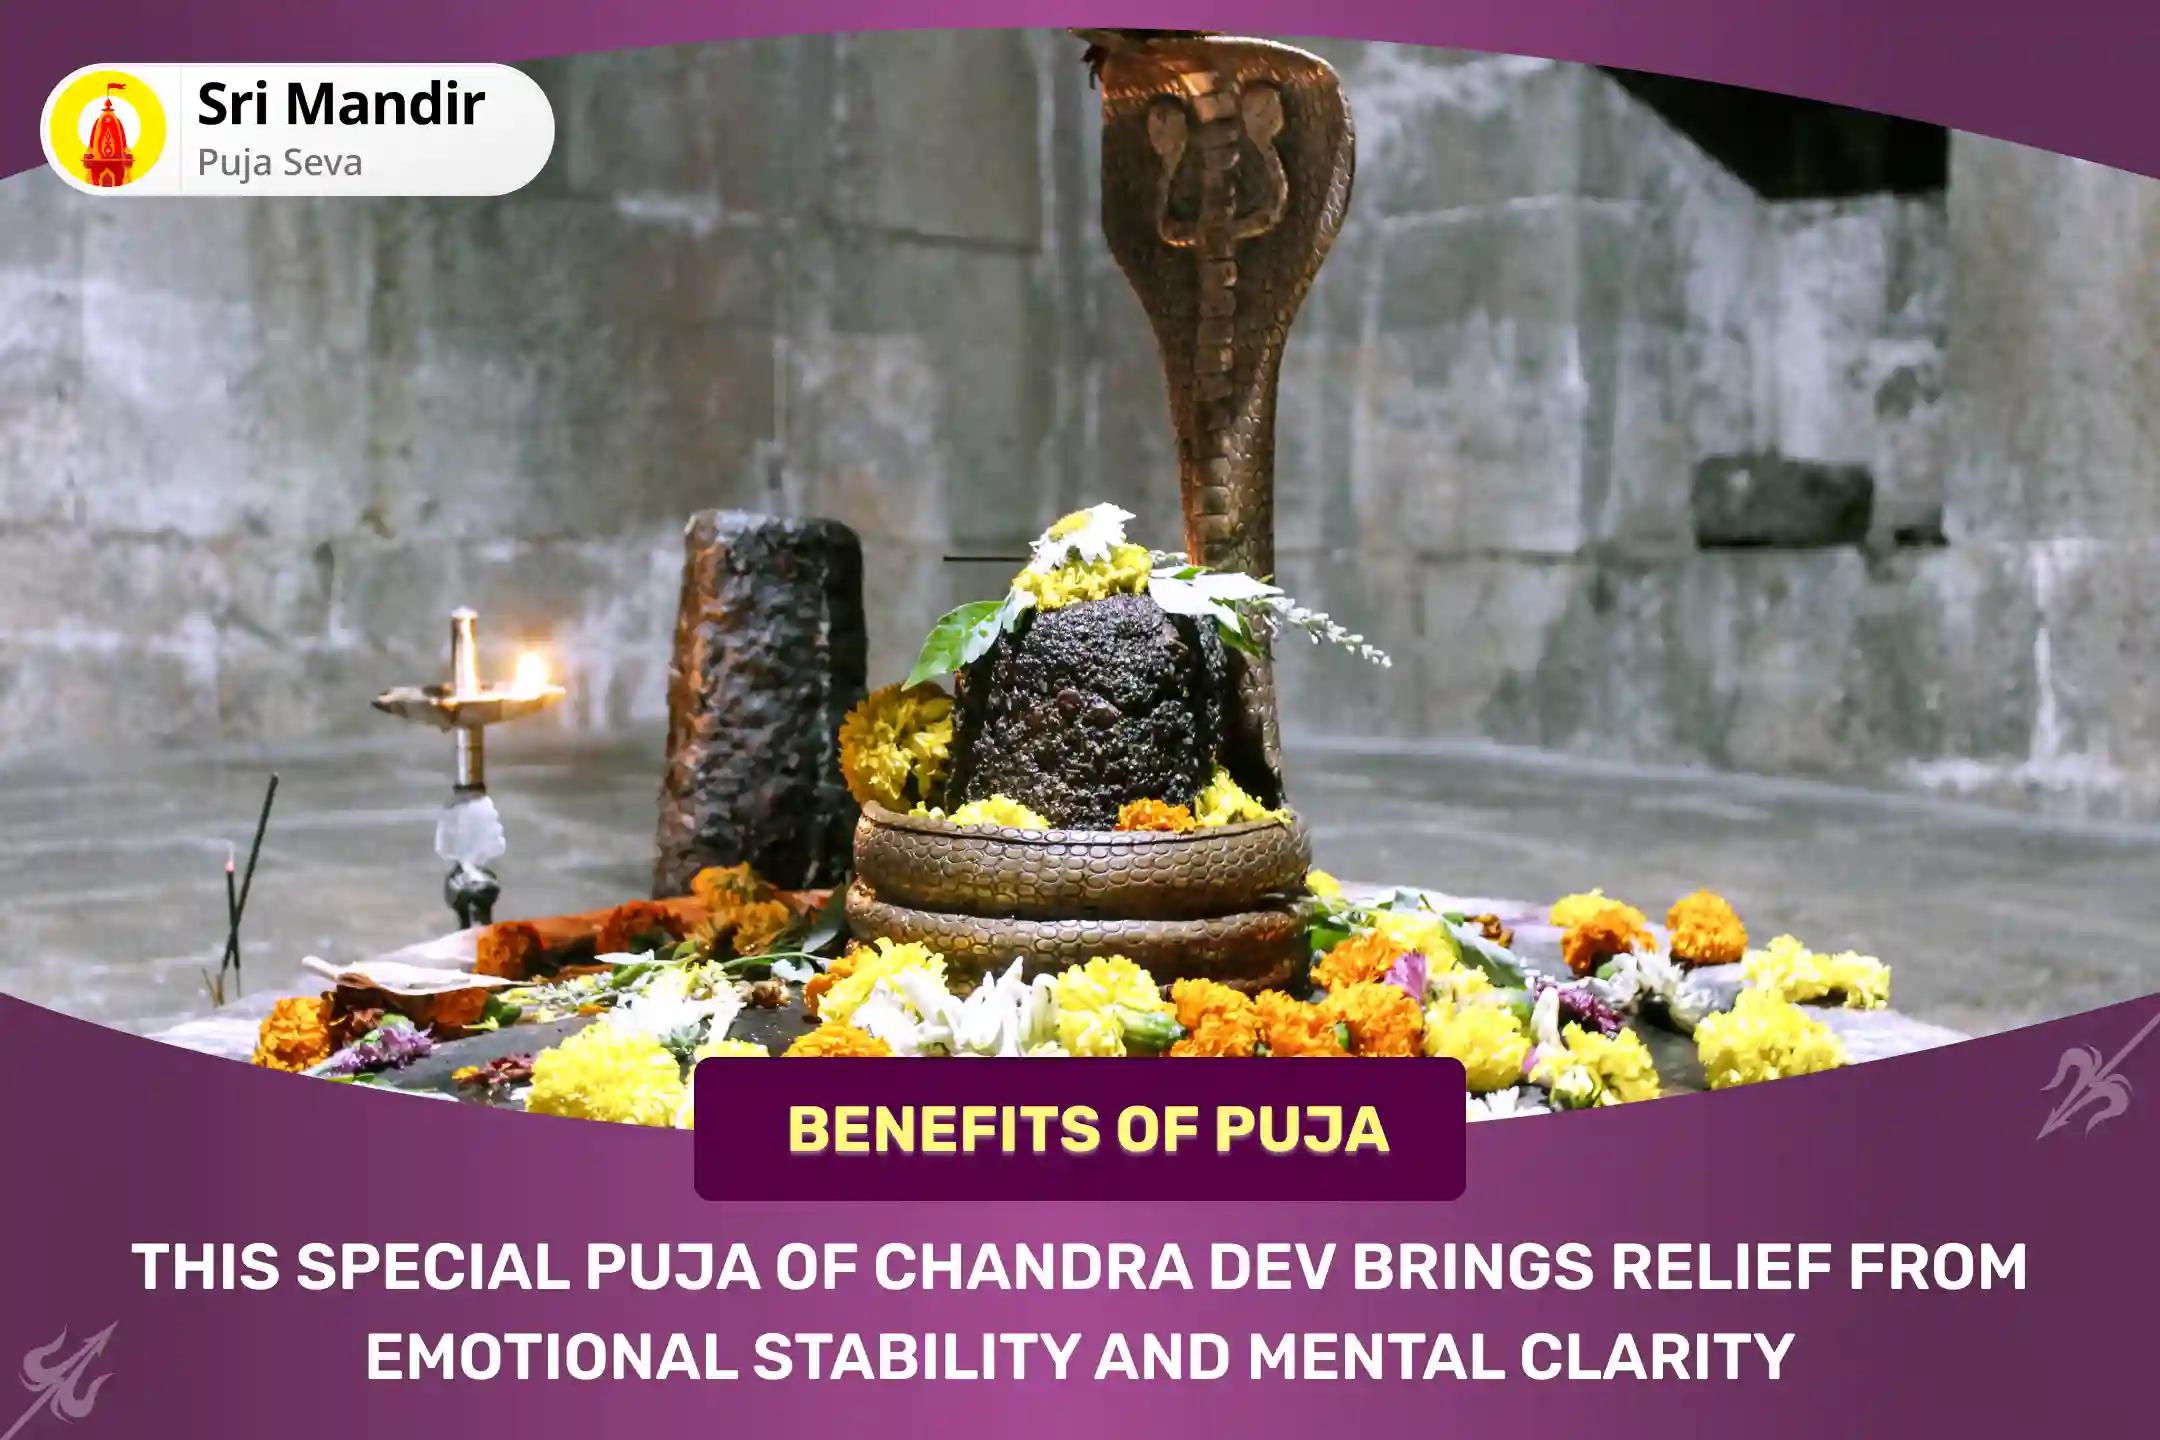 Shukla Navami Special Chandra Graha Dosha Shanti Puja and Rudrabhishek for Emotional Stability and Mental Clarity